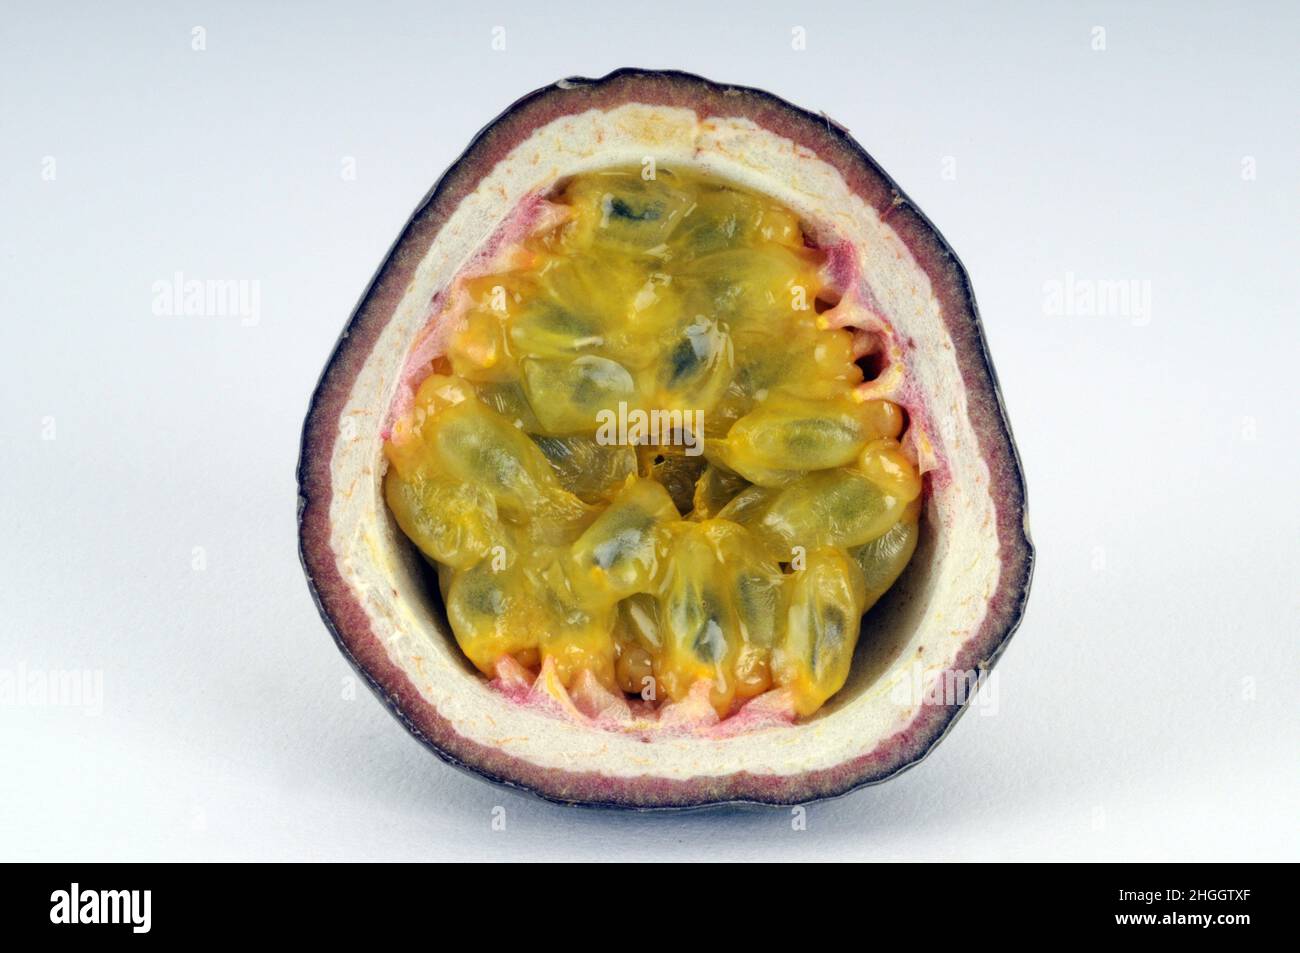 passion fruit, granadilla (Passiflora edulis), halved passion fruit Stock Photo